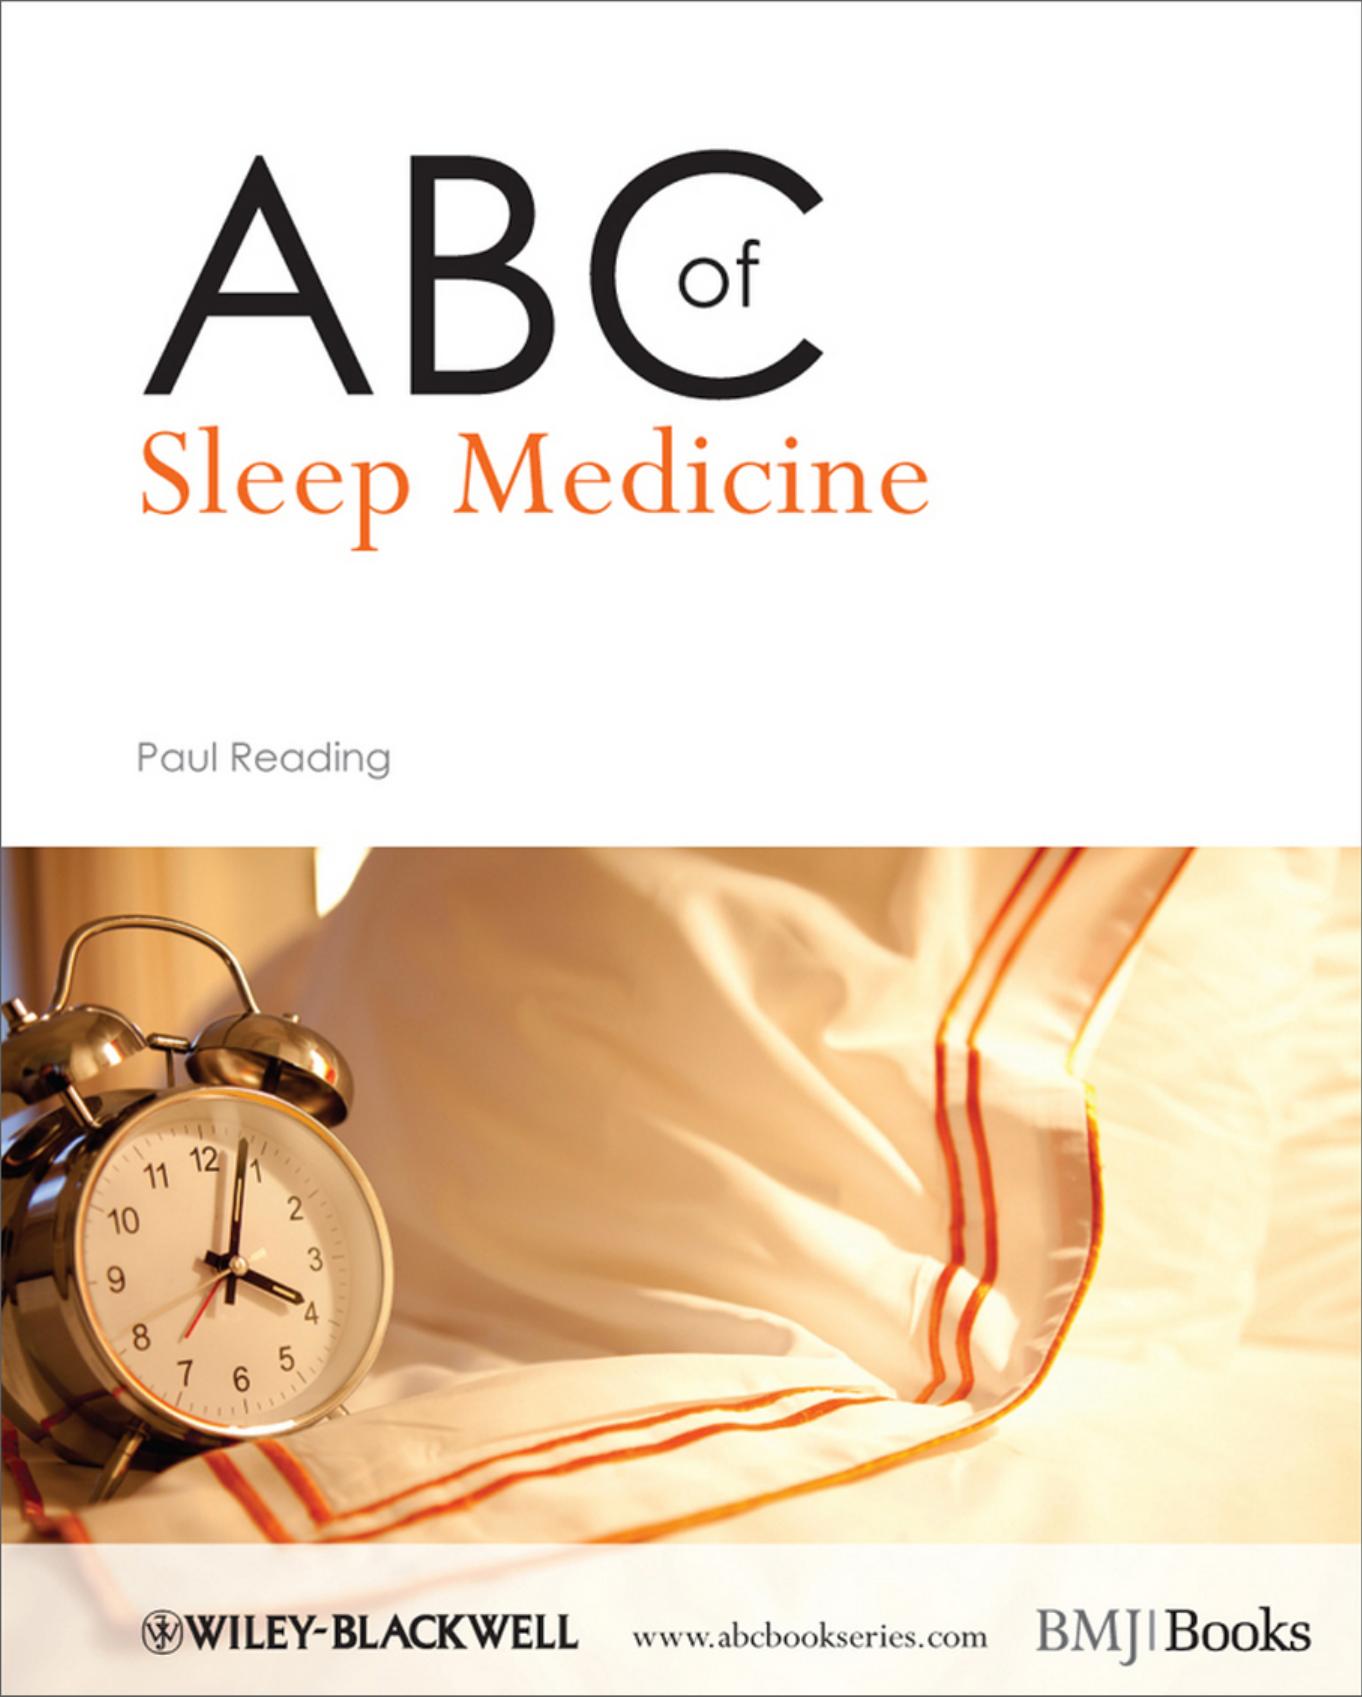 ABC of Sleep Medicine - Paul Reading.jpg